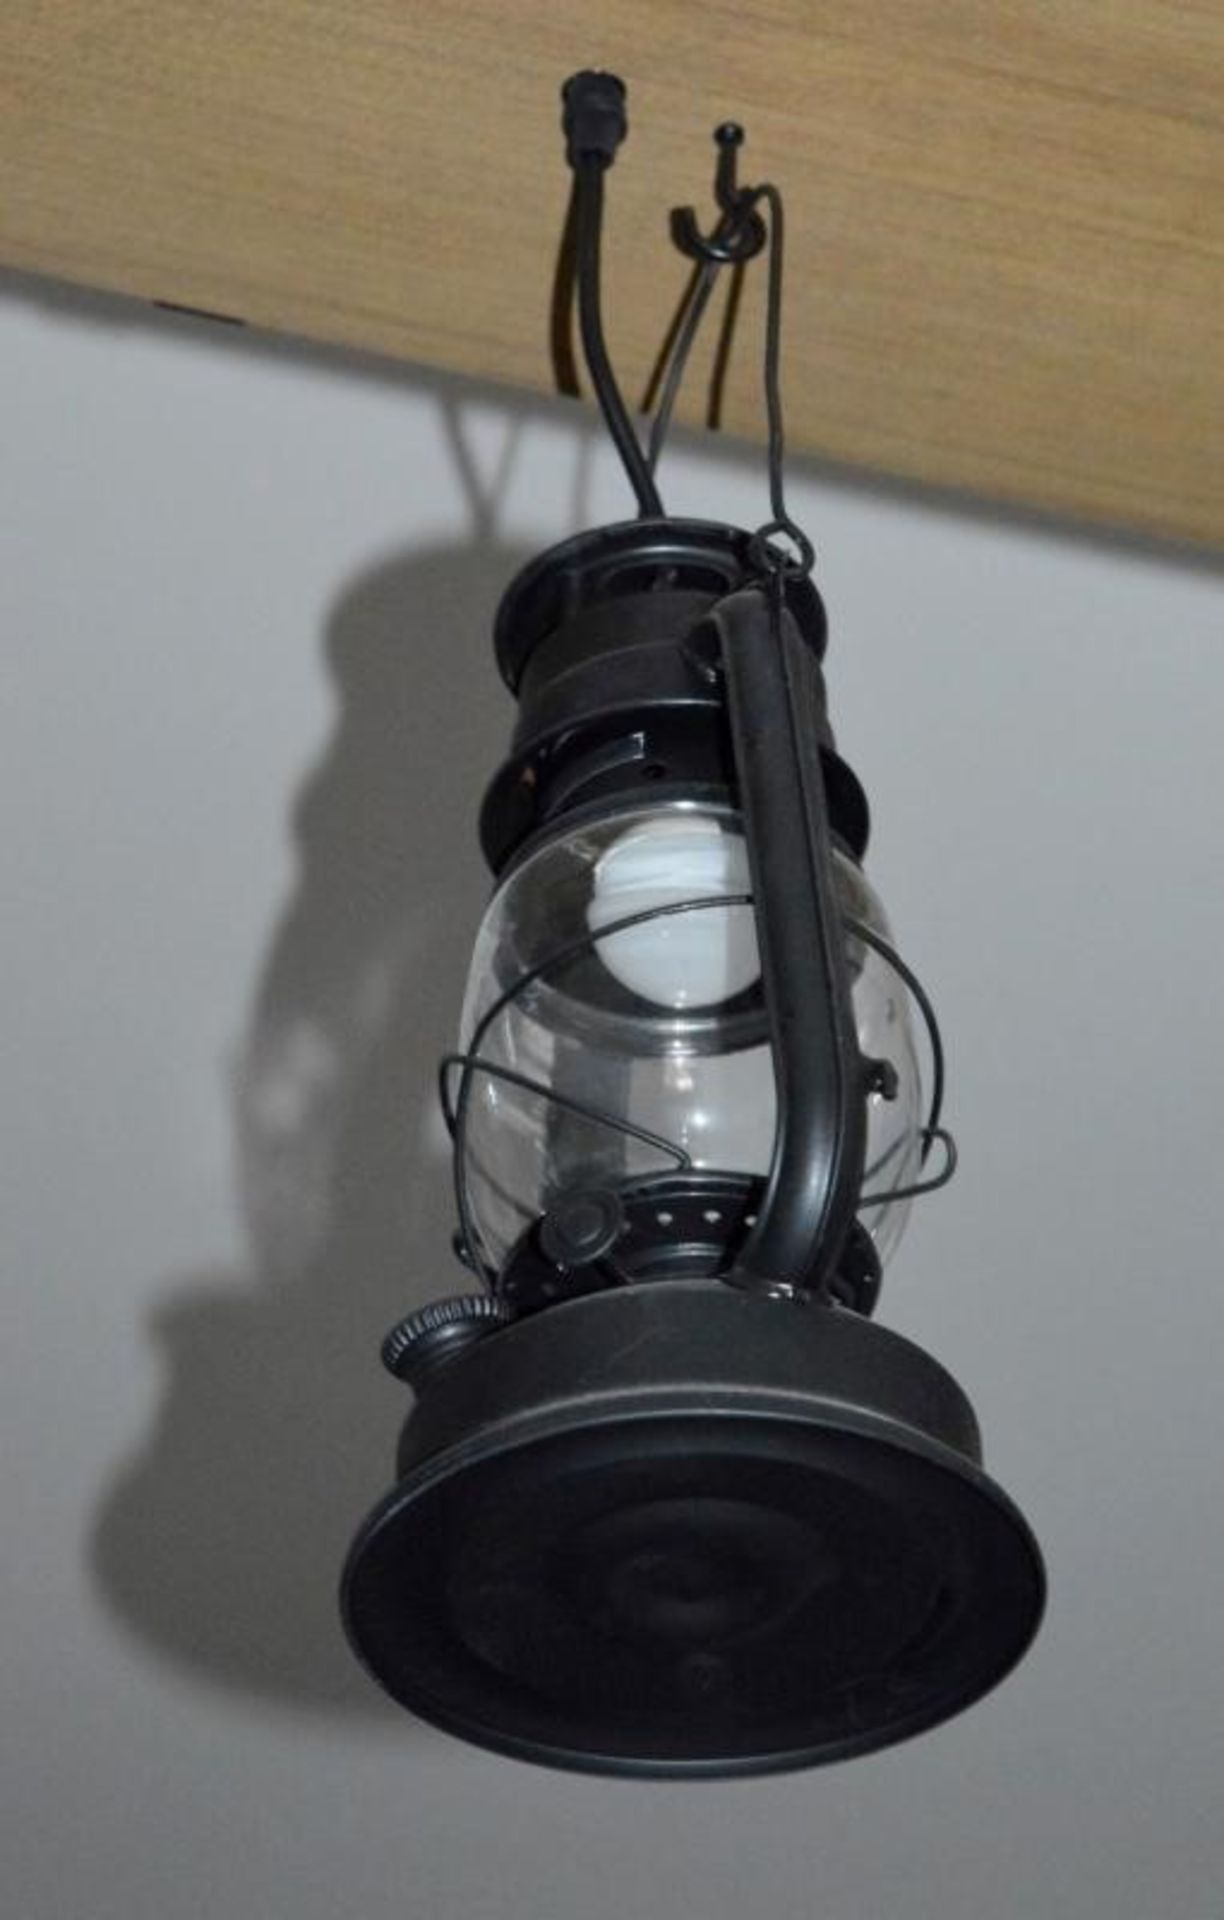 1 x Rustic Wooden Beam Decorative 5 Hurricane Lantern Ceiling Light - Ex Display Stock - CL298 - Ref - Image 5 of 5